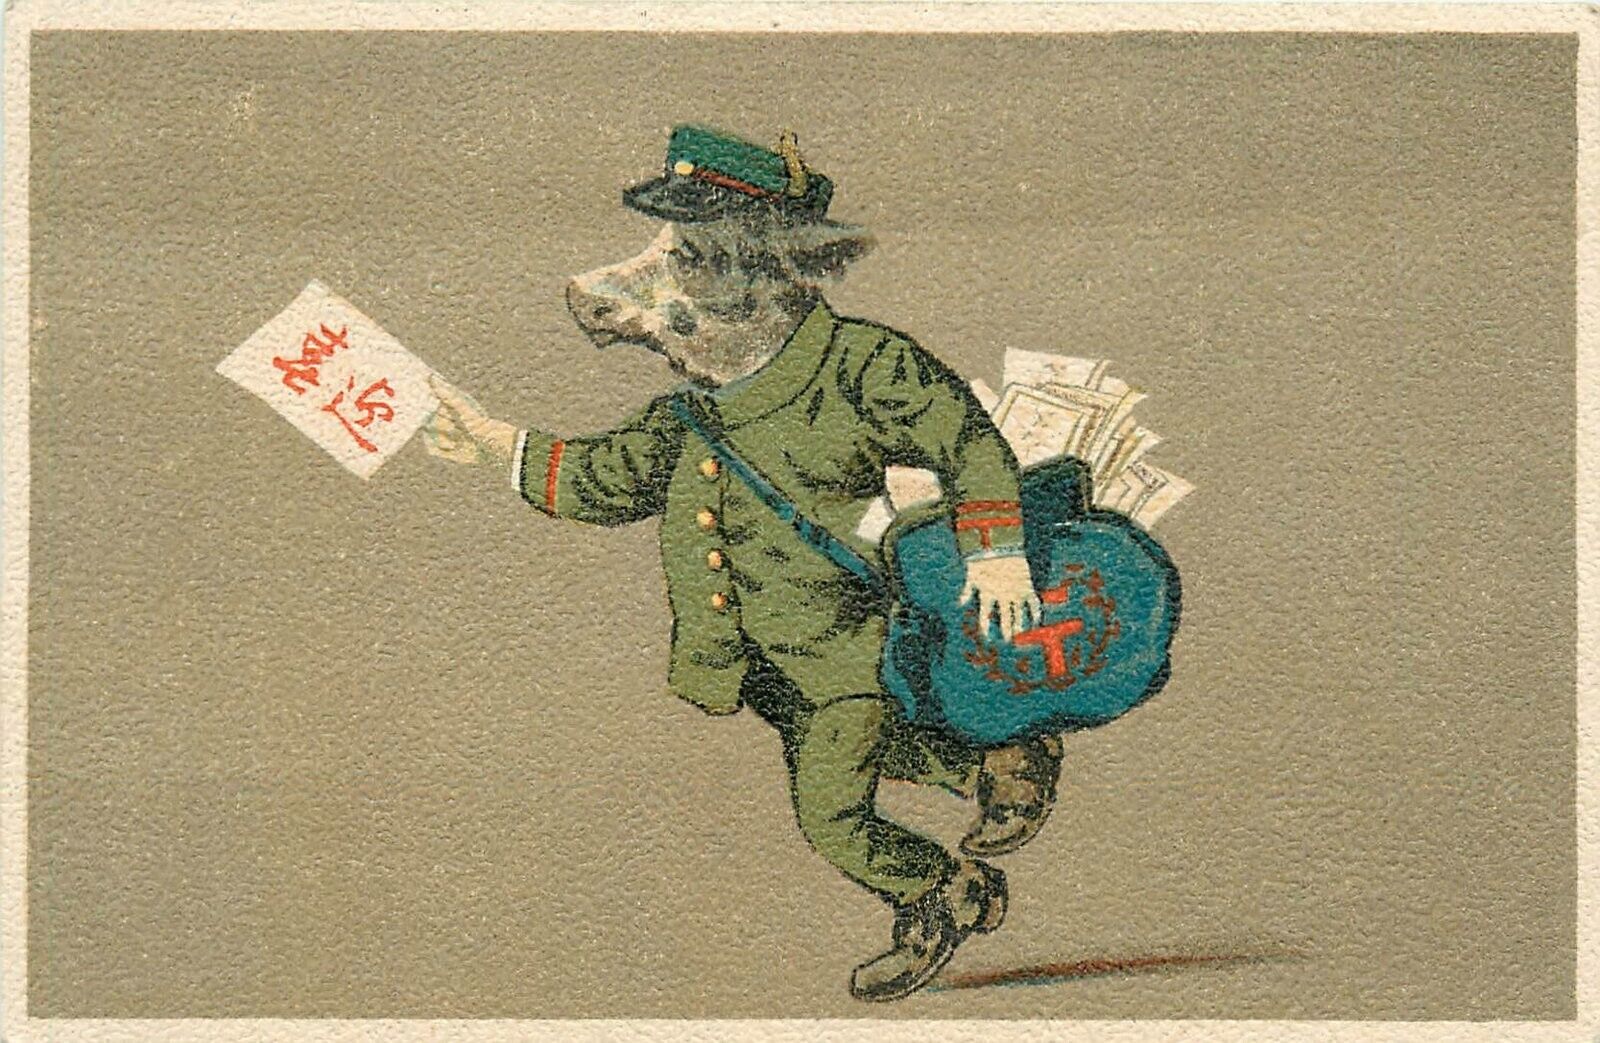 Postcard C-1910 Pig Mailman April 1st Comic humor artist impression TP24-1021